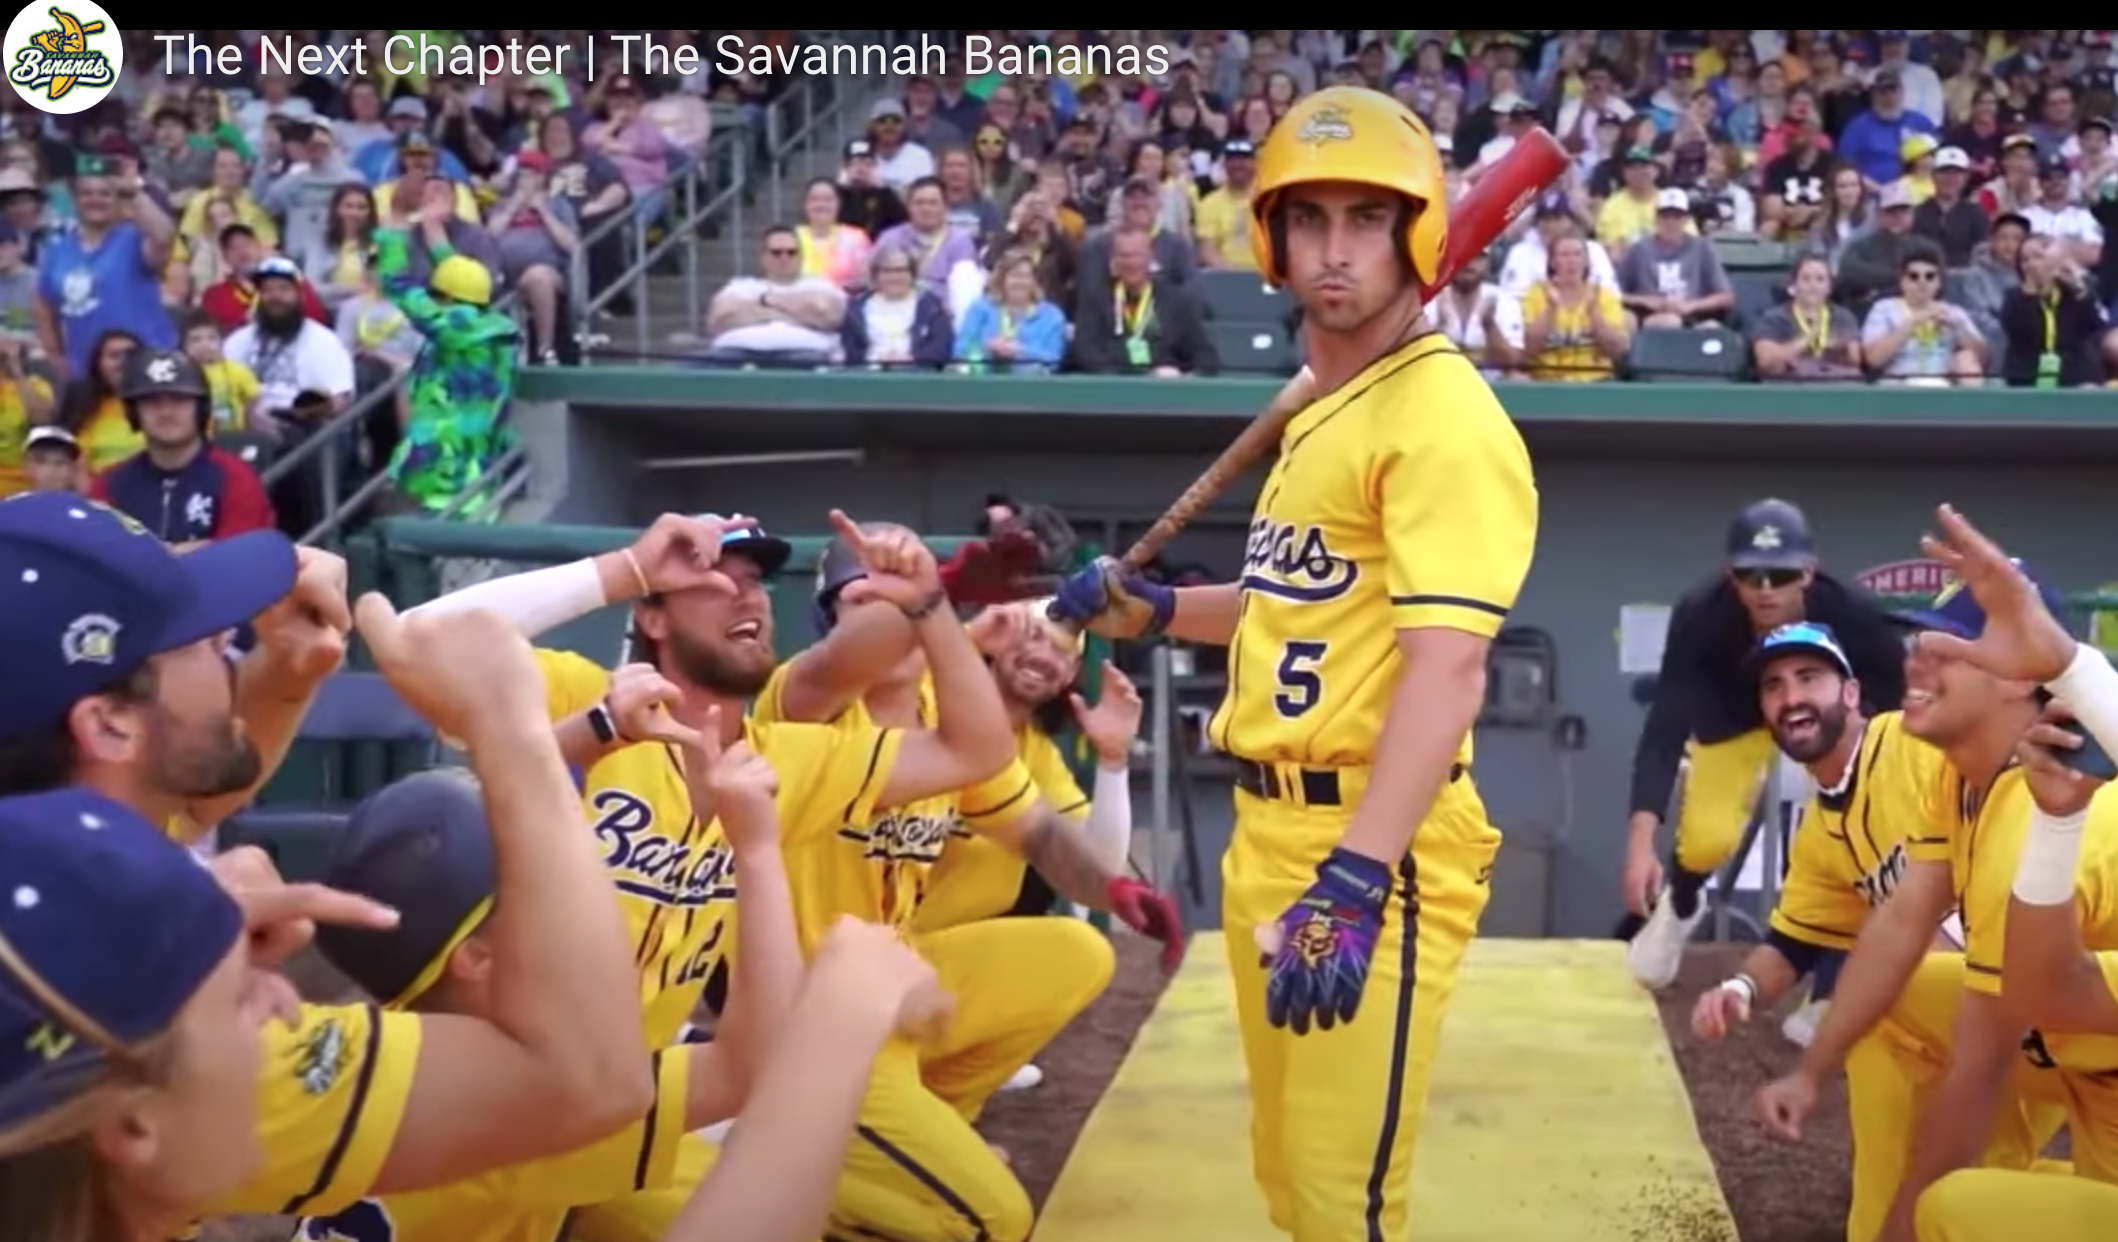 Savannah Ghost Pirates hockey tapping into Bananas success sports fans